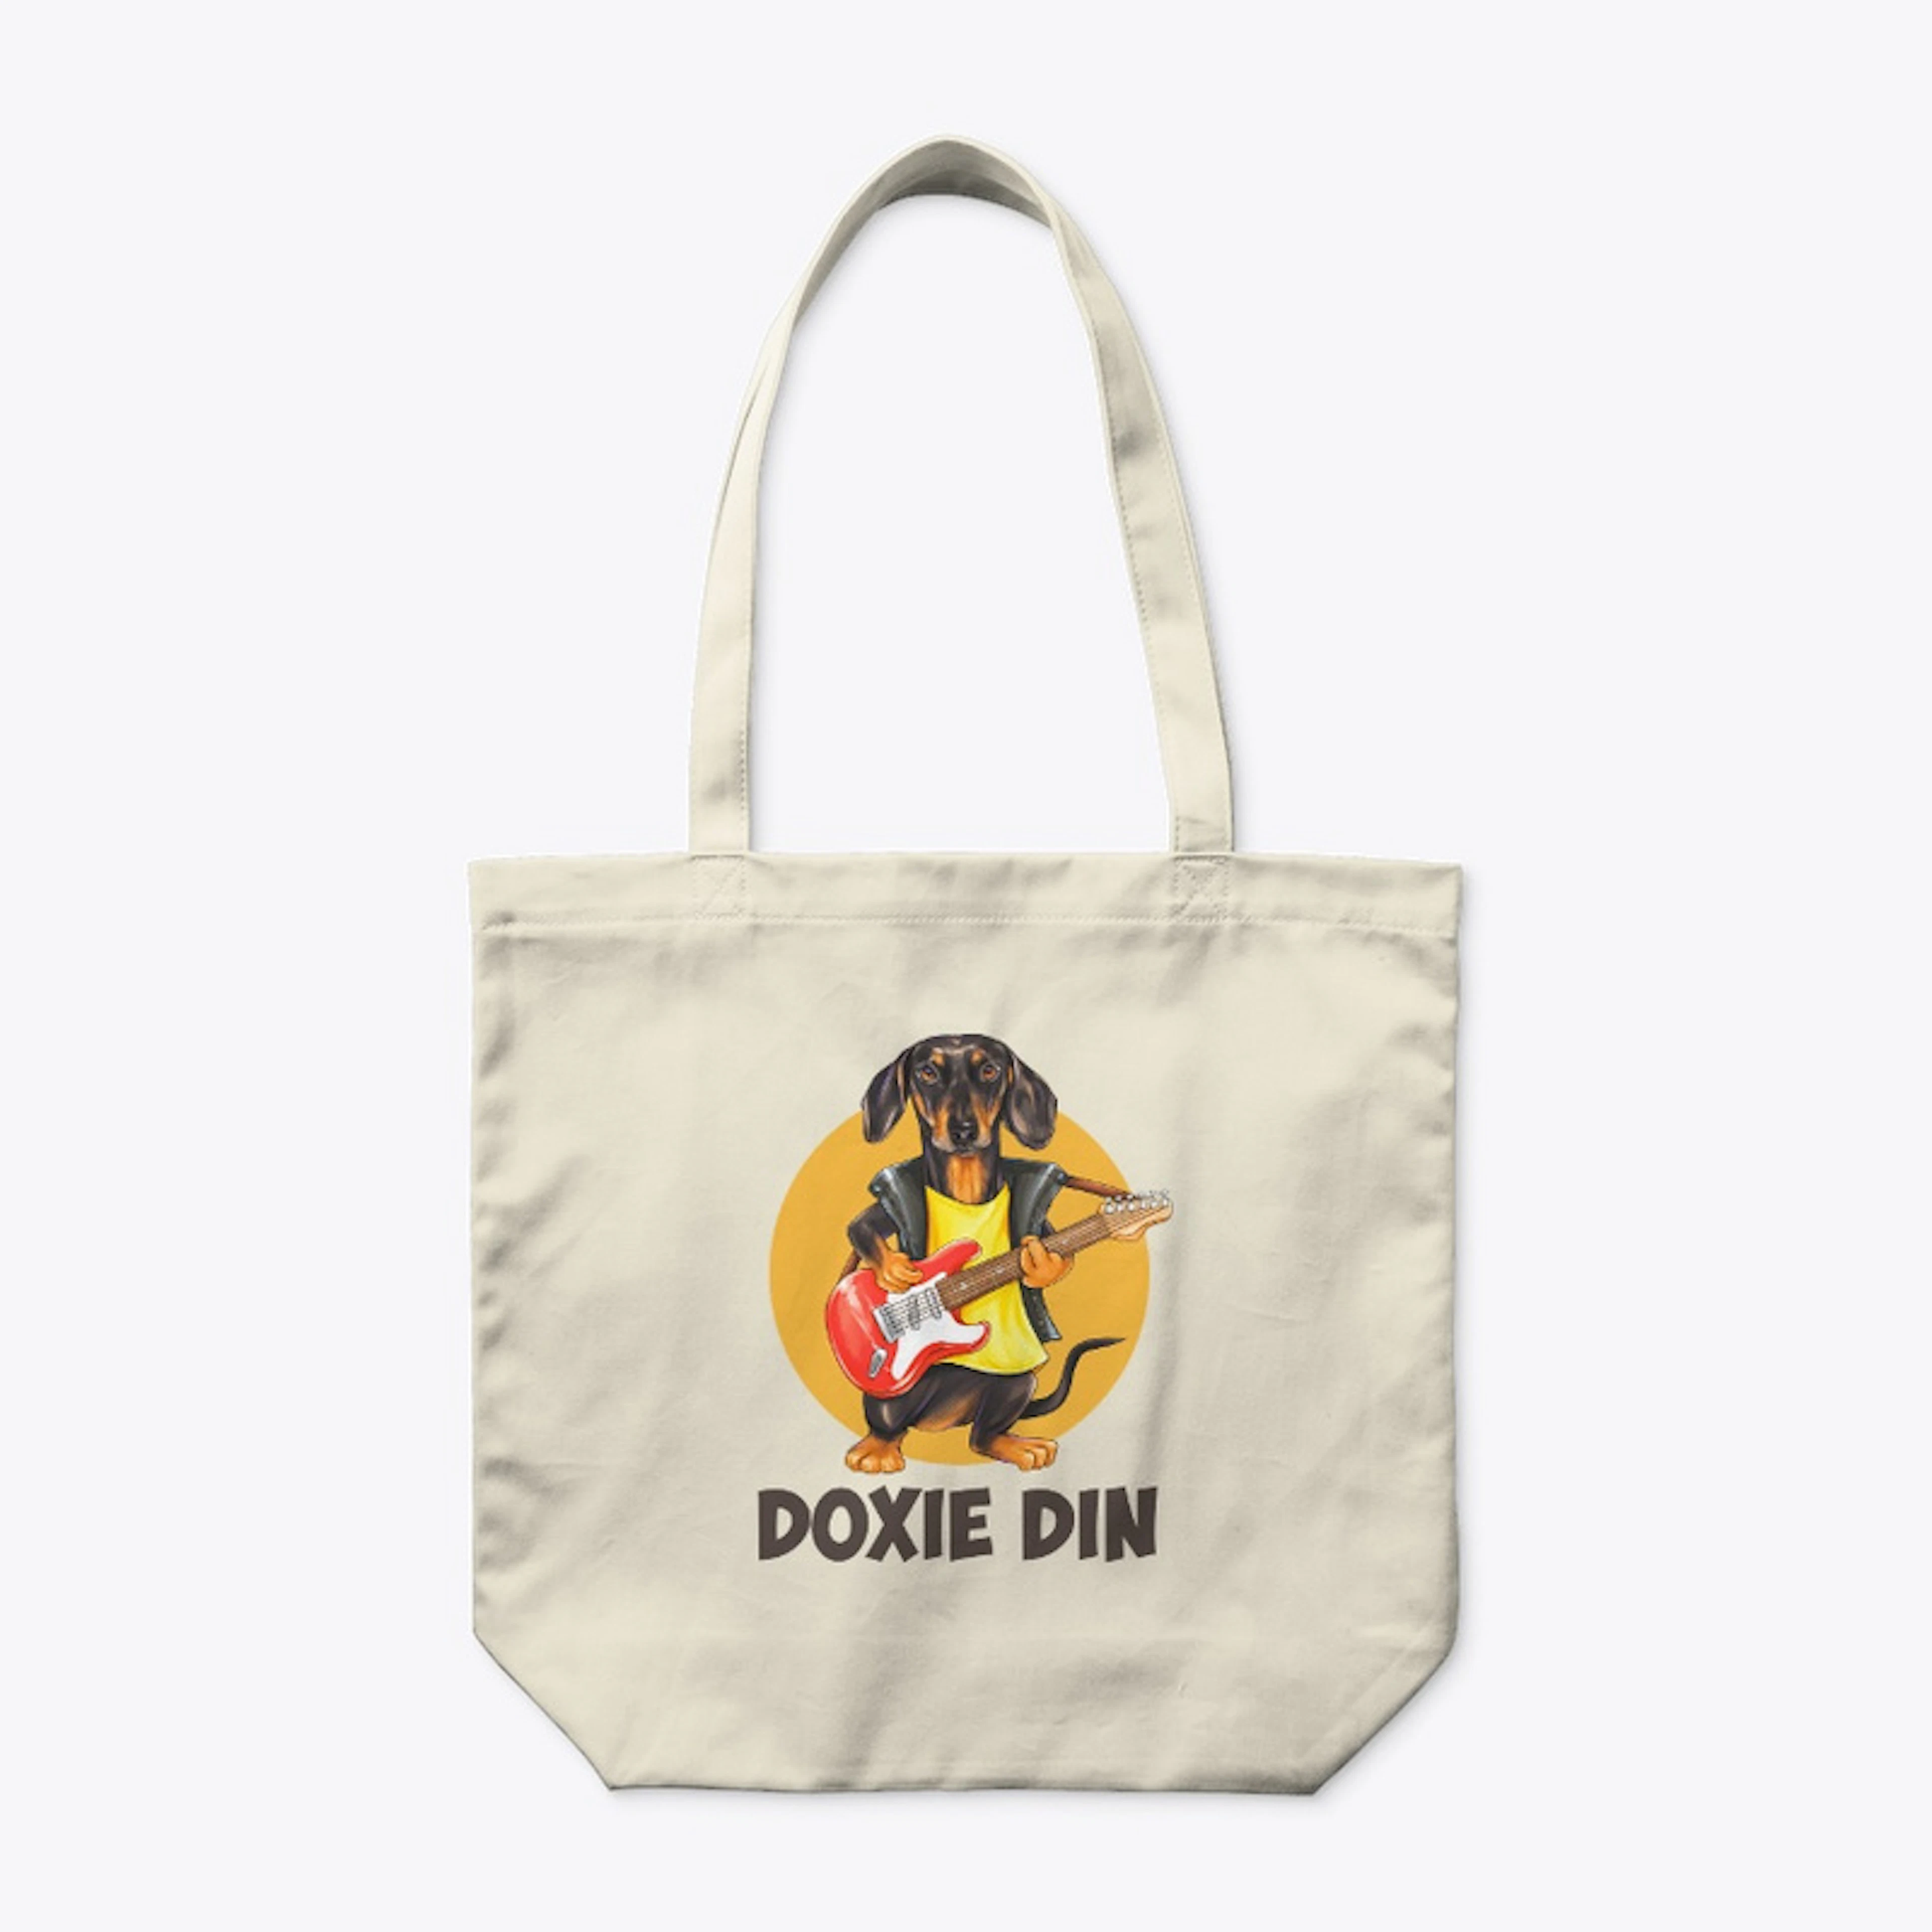 Doxie Rock - Doxie Din